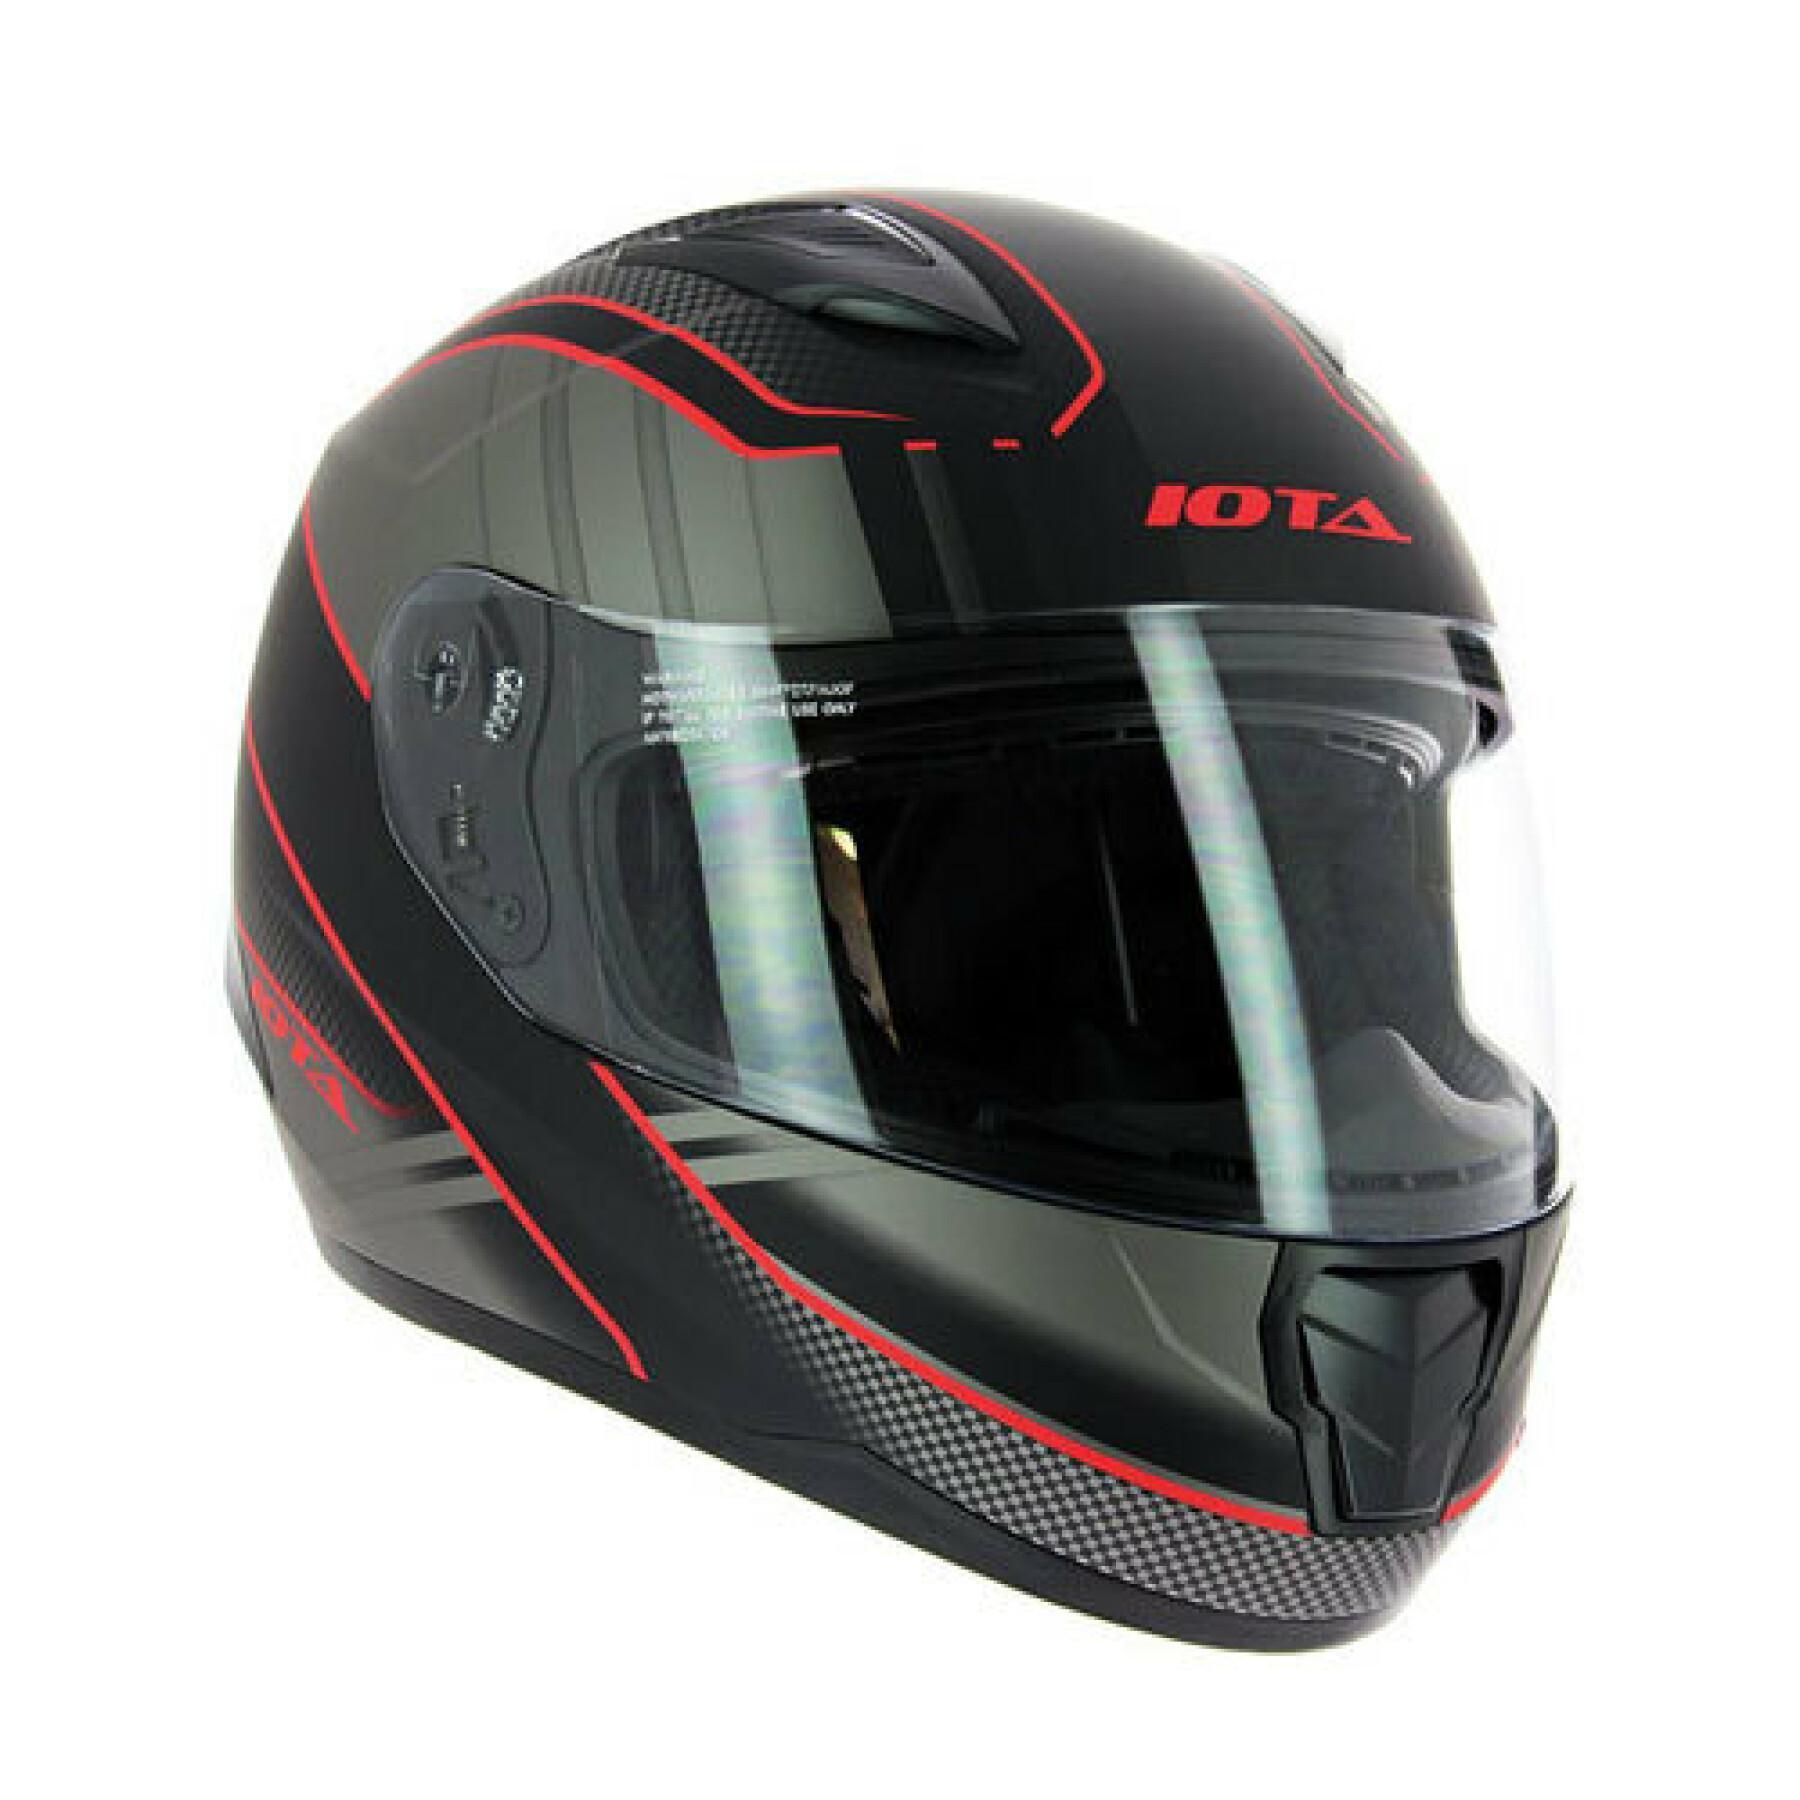 Full face helmet Iota fp10 caly